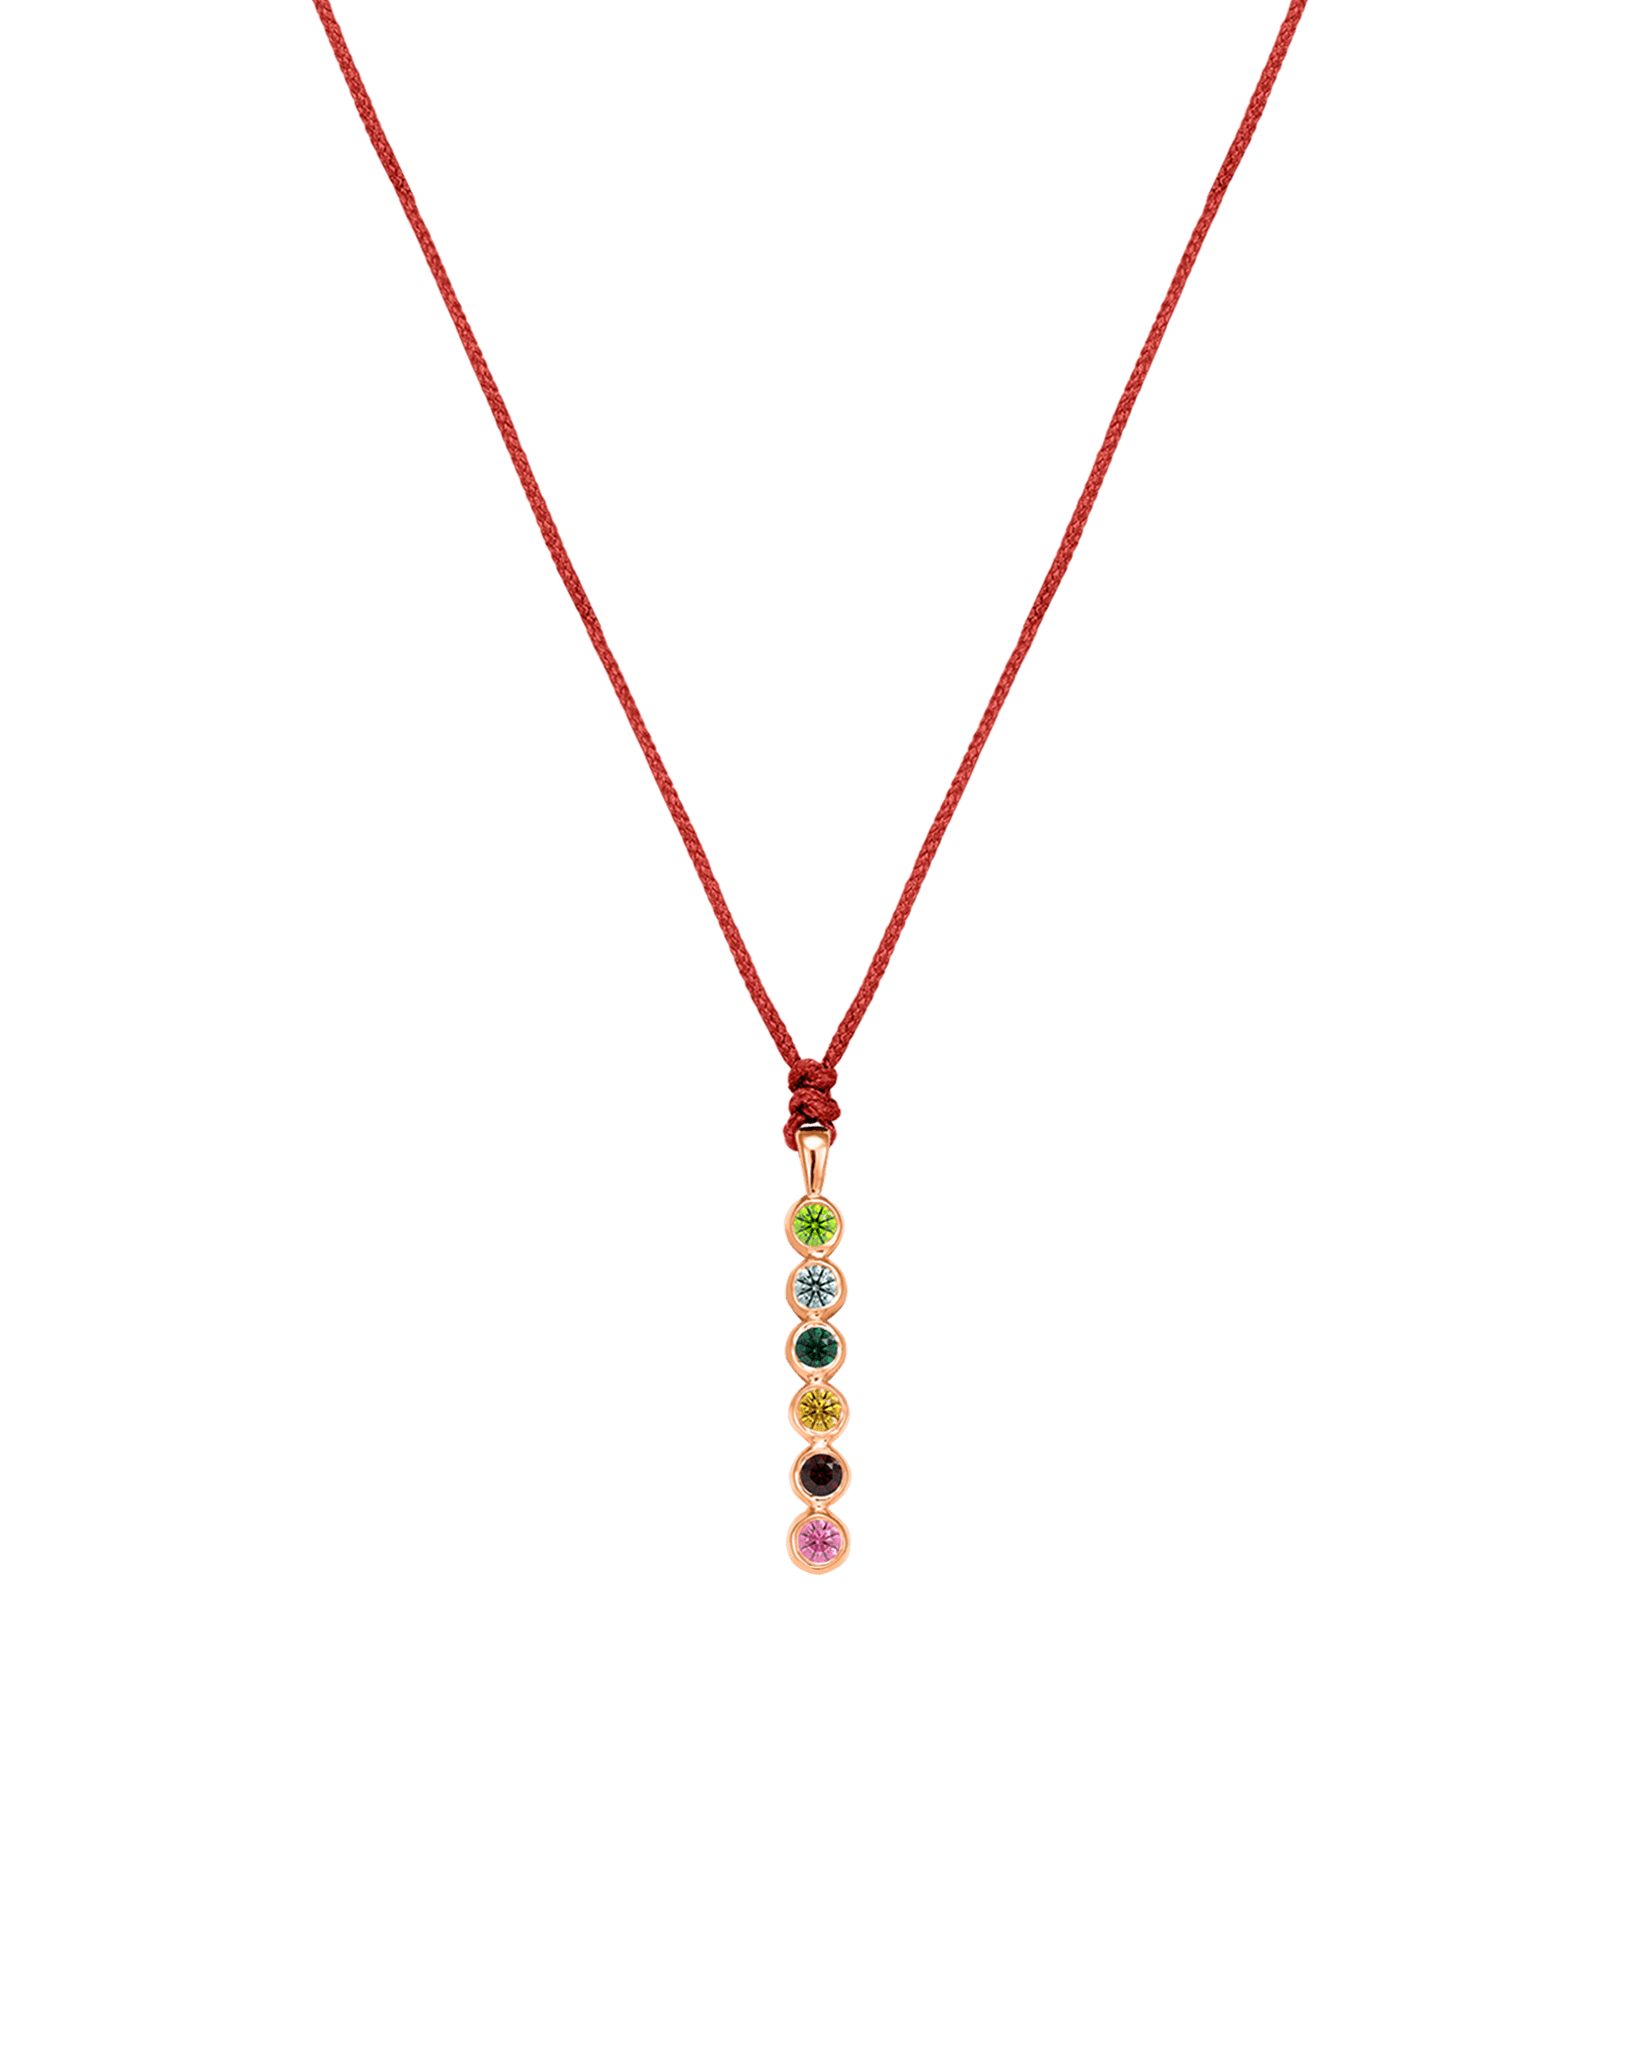 The Birthstones Bar Necklace - 14K Rose Gold Necklaces 14K Solid Gold Red 2 